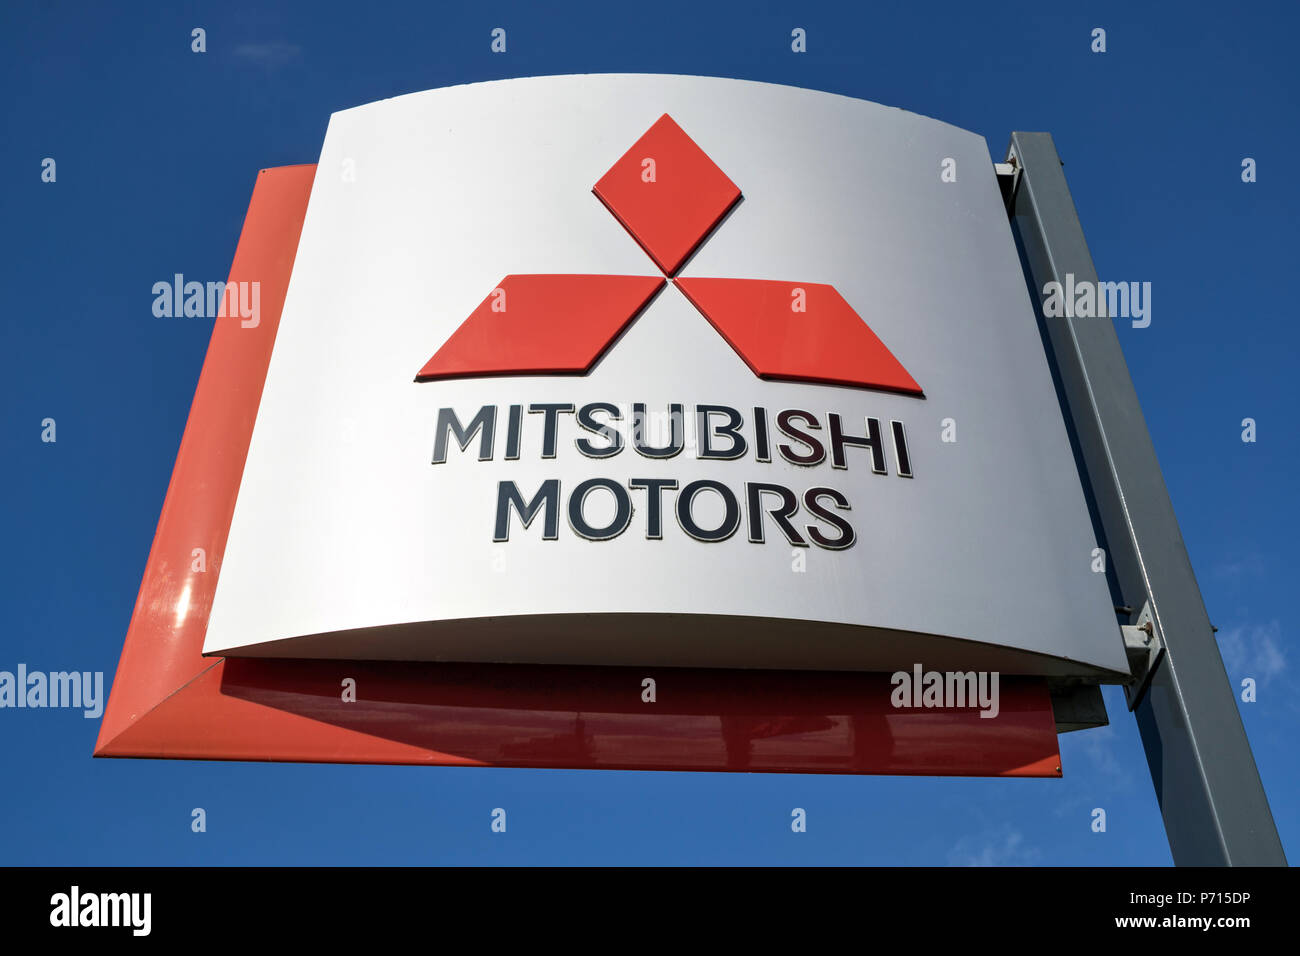 Mitsubishi dealership sign against blue sky. Mitsubishi  Motors is a Japanese multinational automotive manufacturer headquartered in Minato, Tokyo. Stock Photo